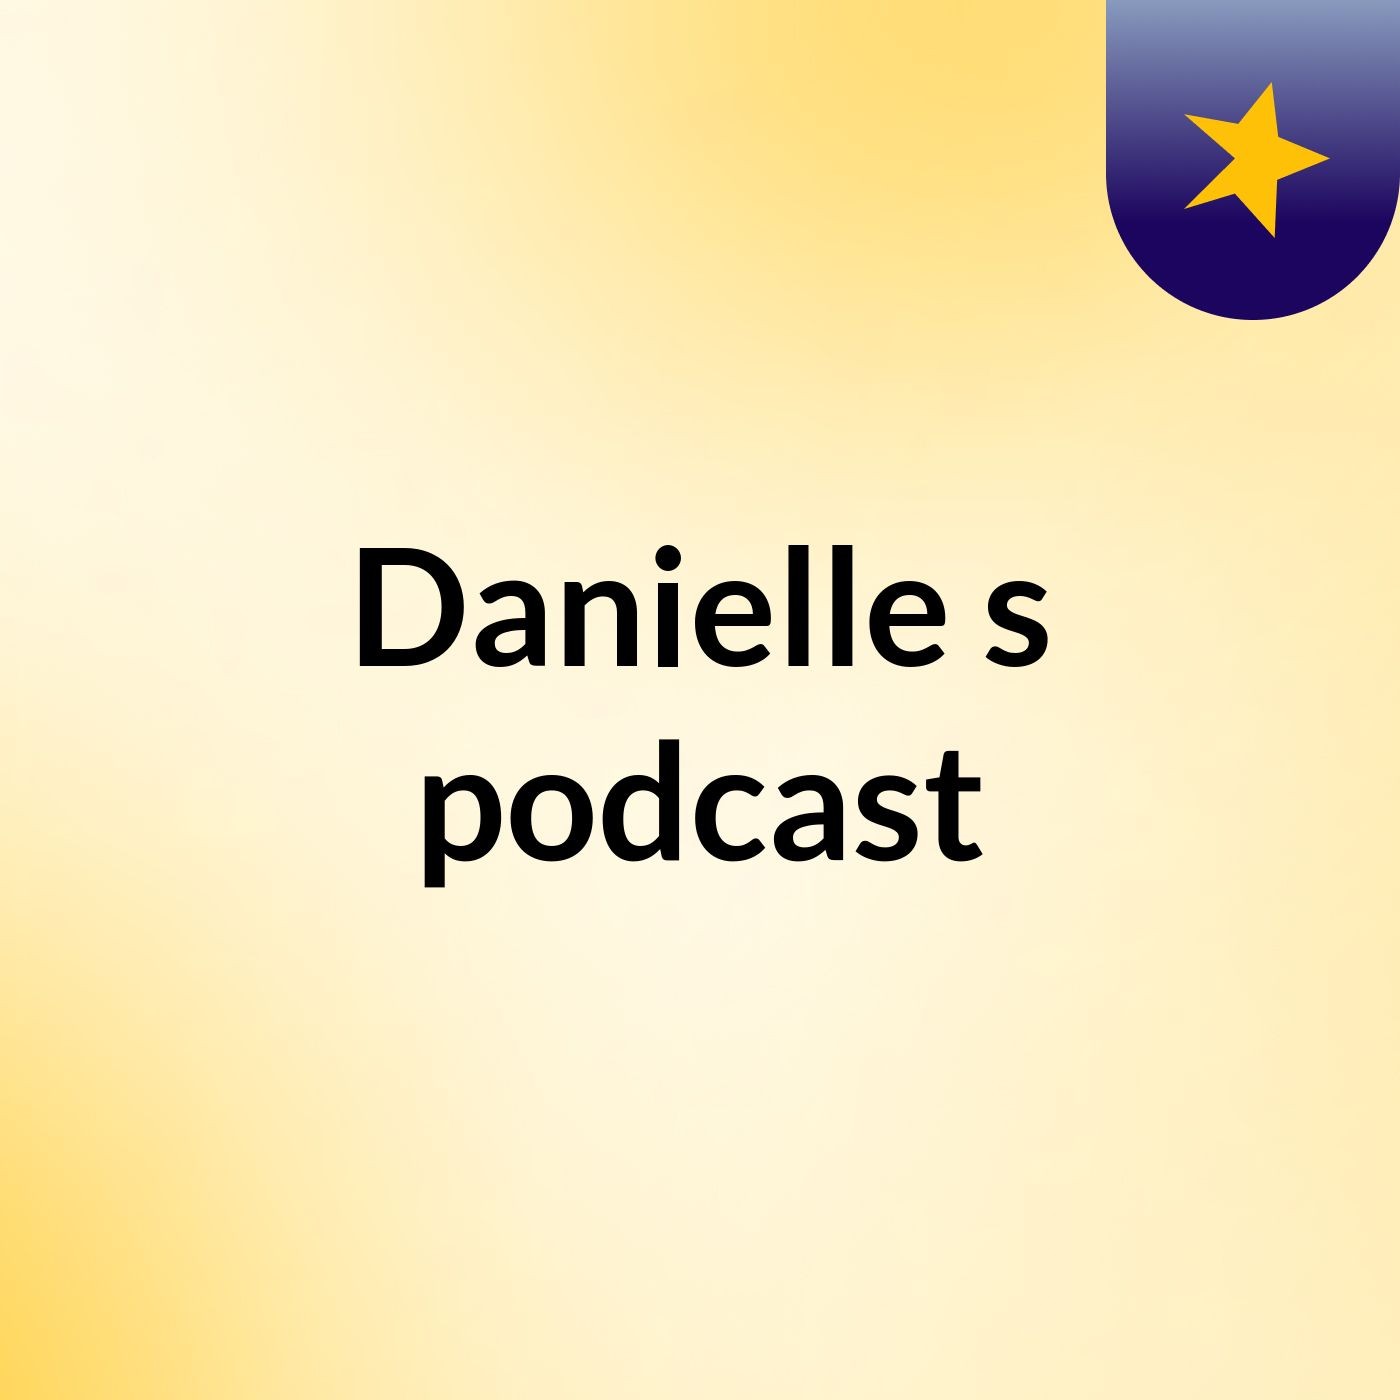 Danielle's podcast